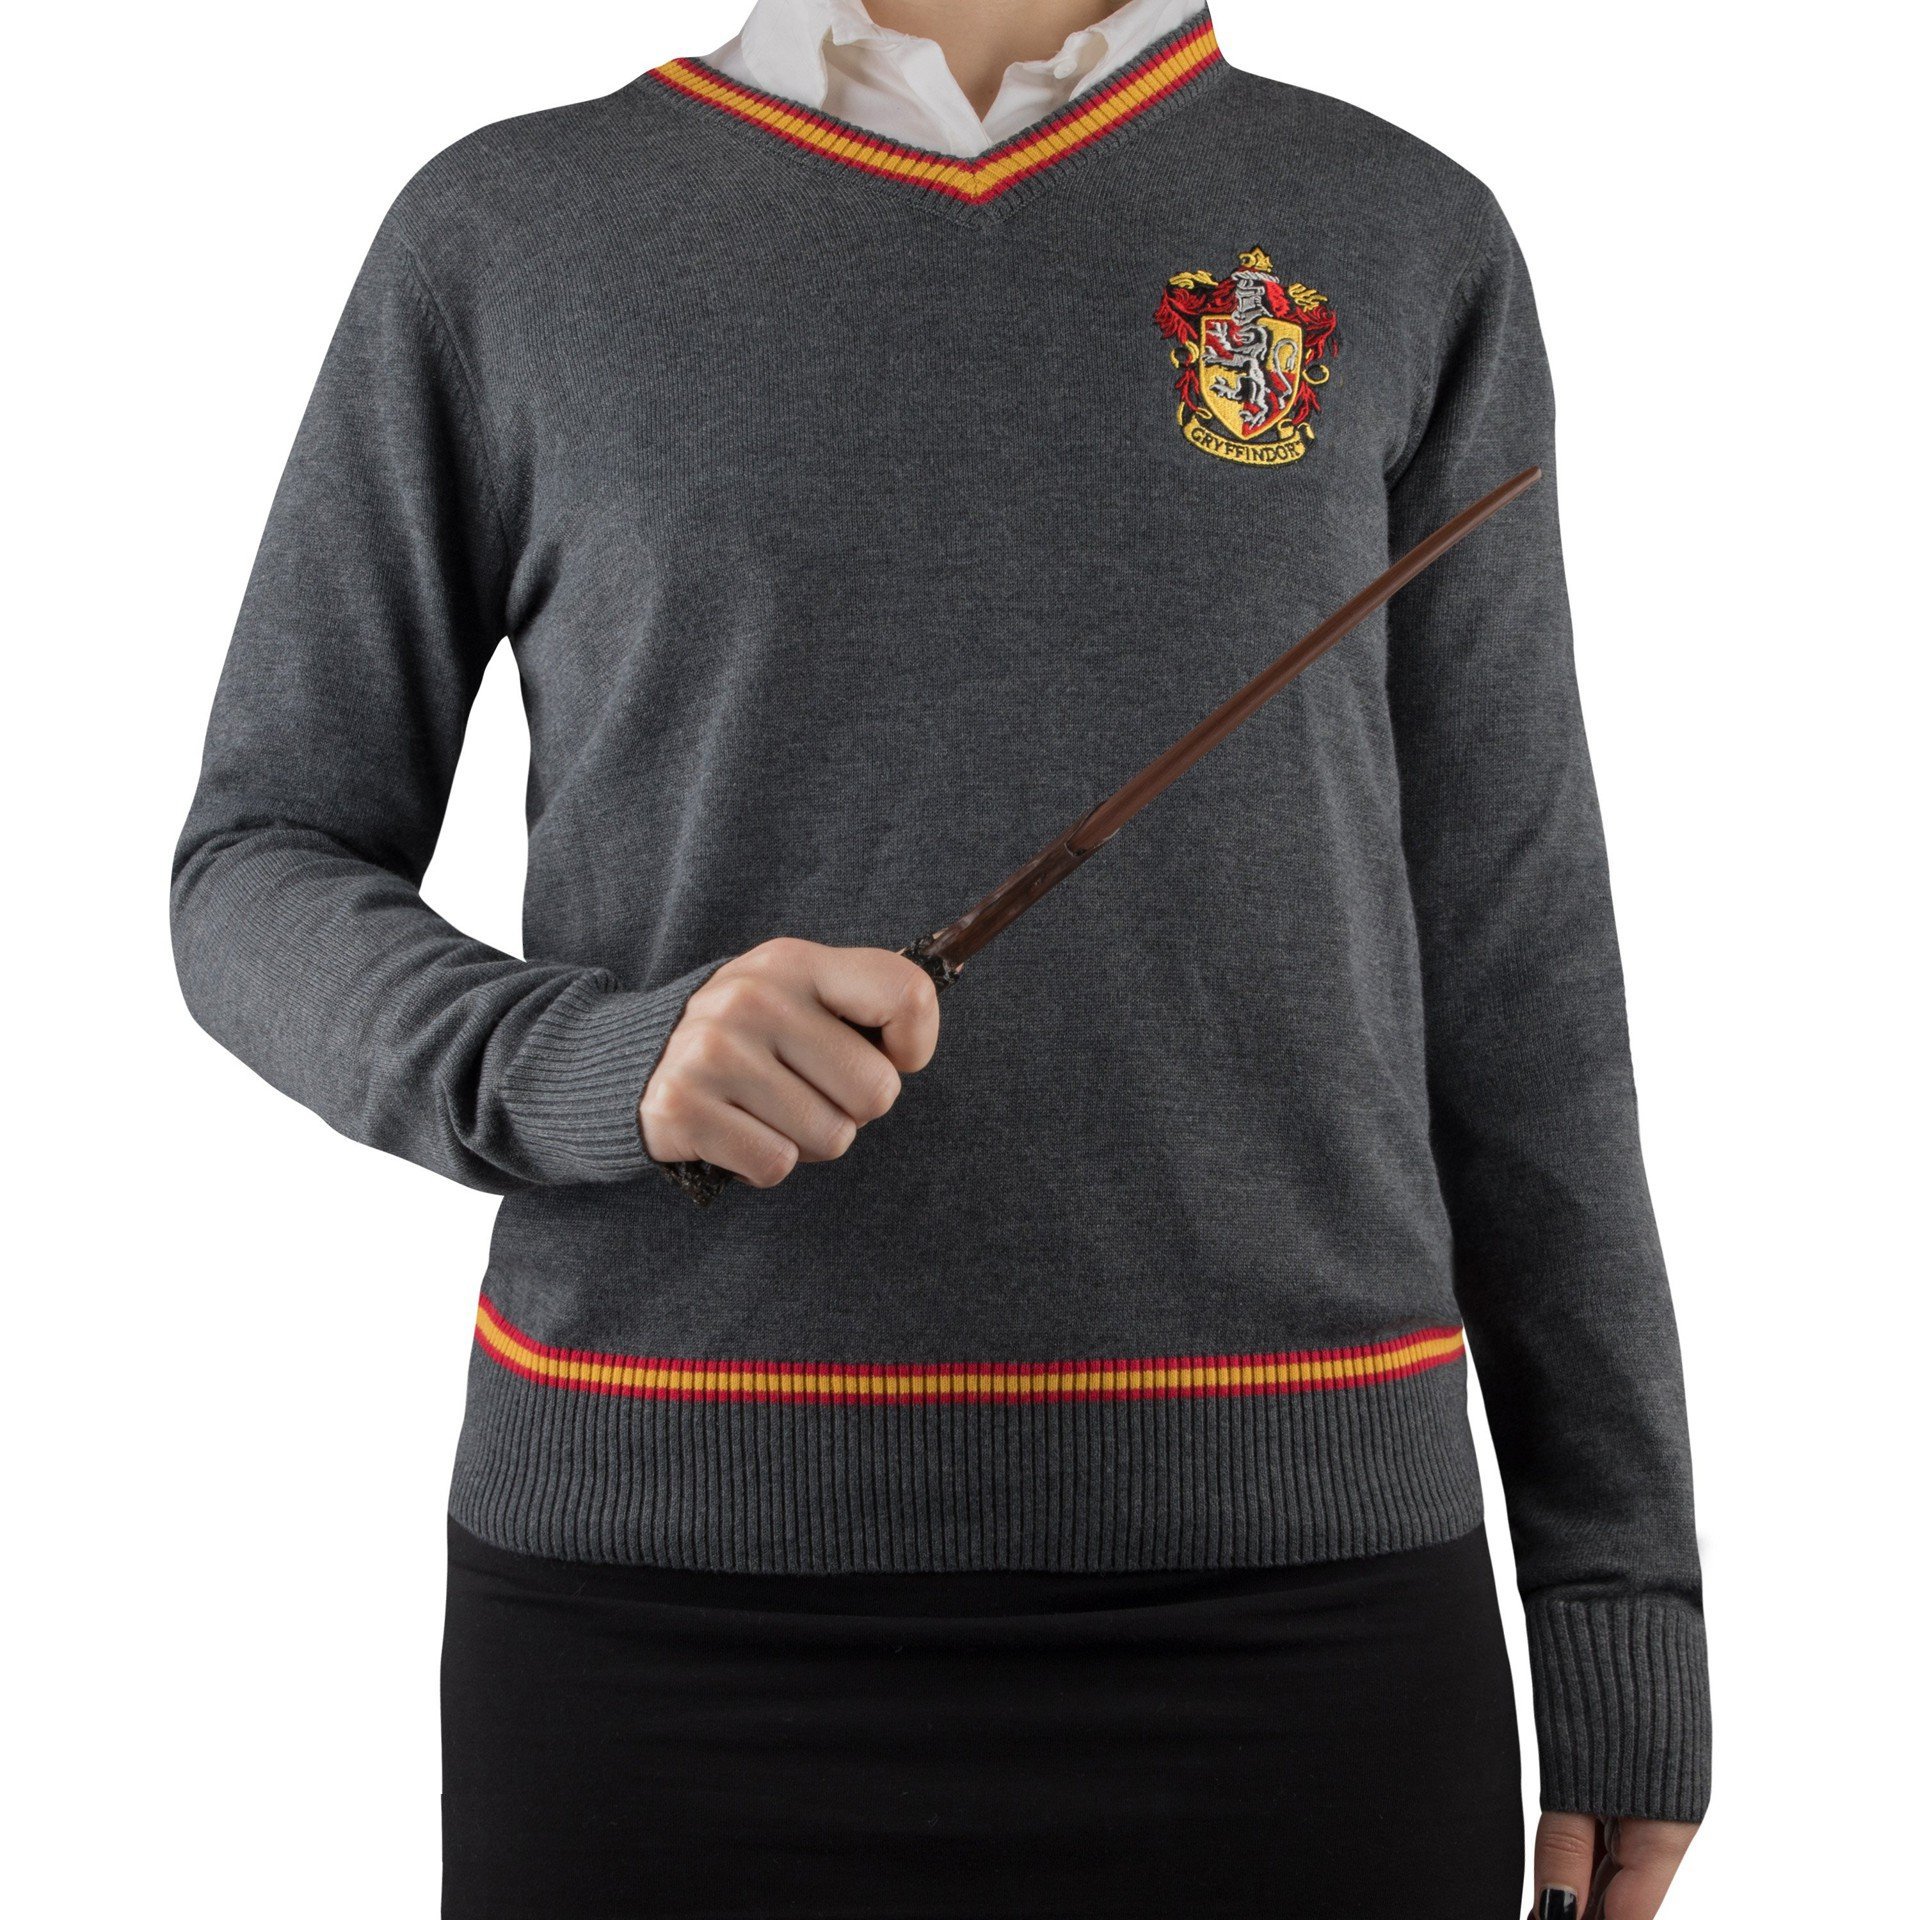 Harry Potter - Gryffindor - Grey Knitted Sweater - Medium - Fan-shop